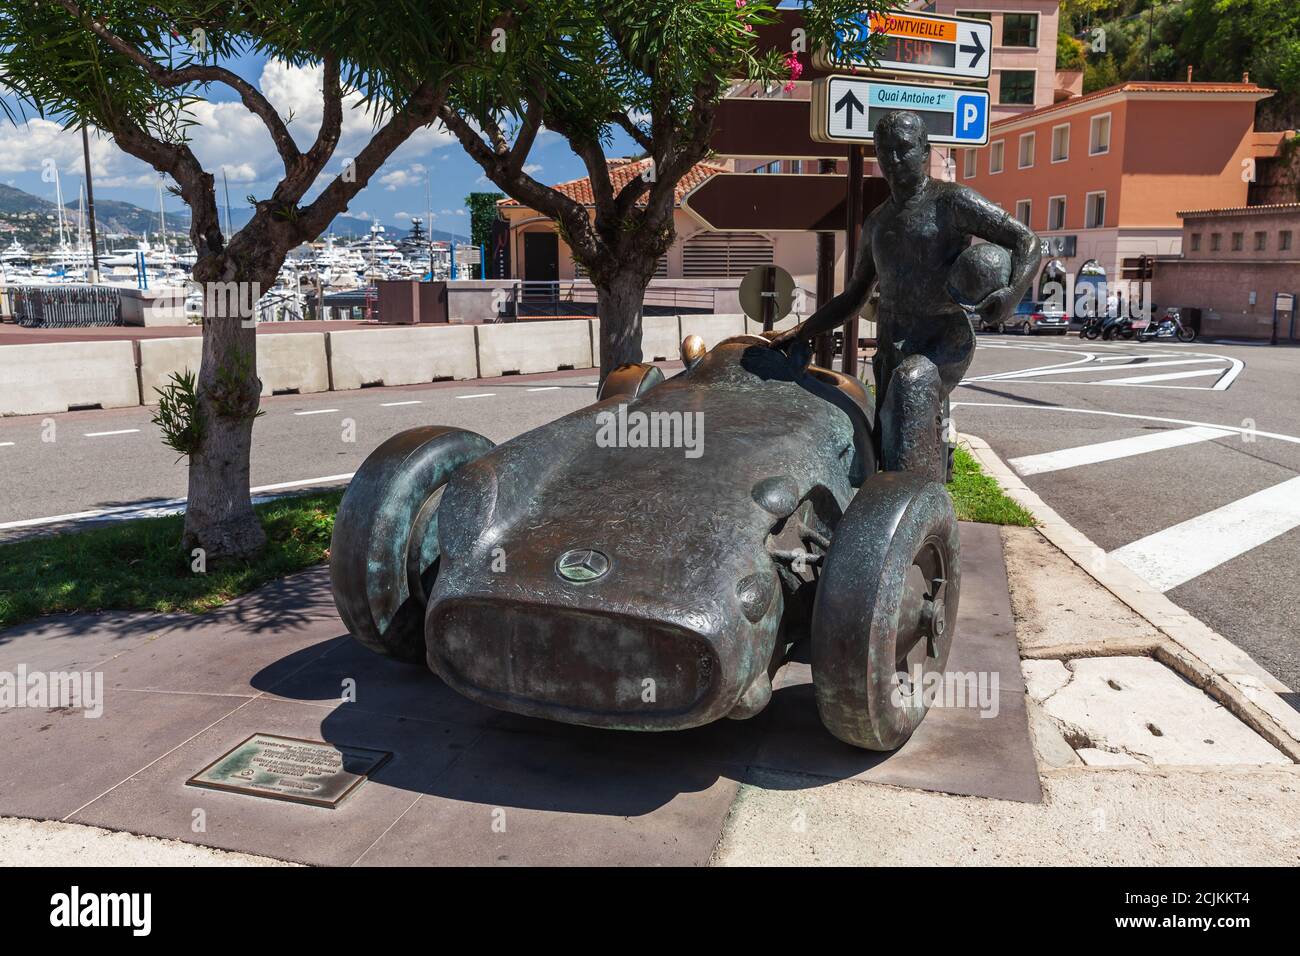 Monte Carlo, Monaco - 15. August 2018: Juan Manuel Fangio Denkmal auf dem Grand Prix Kurs in Monaco. Die Statue zeigt die 5-mal Formel 1 Worl Stockfoto